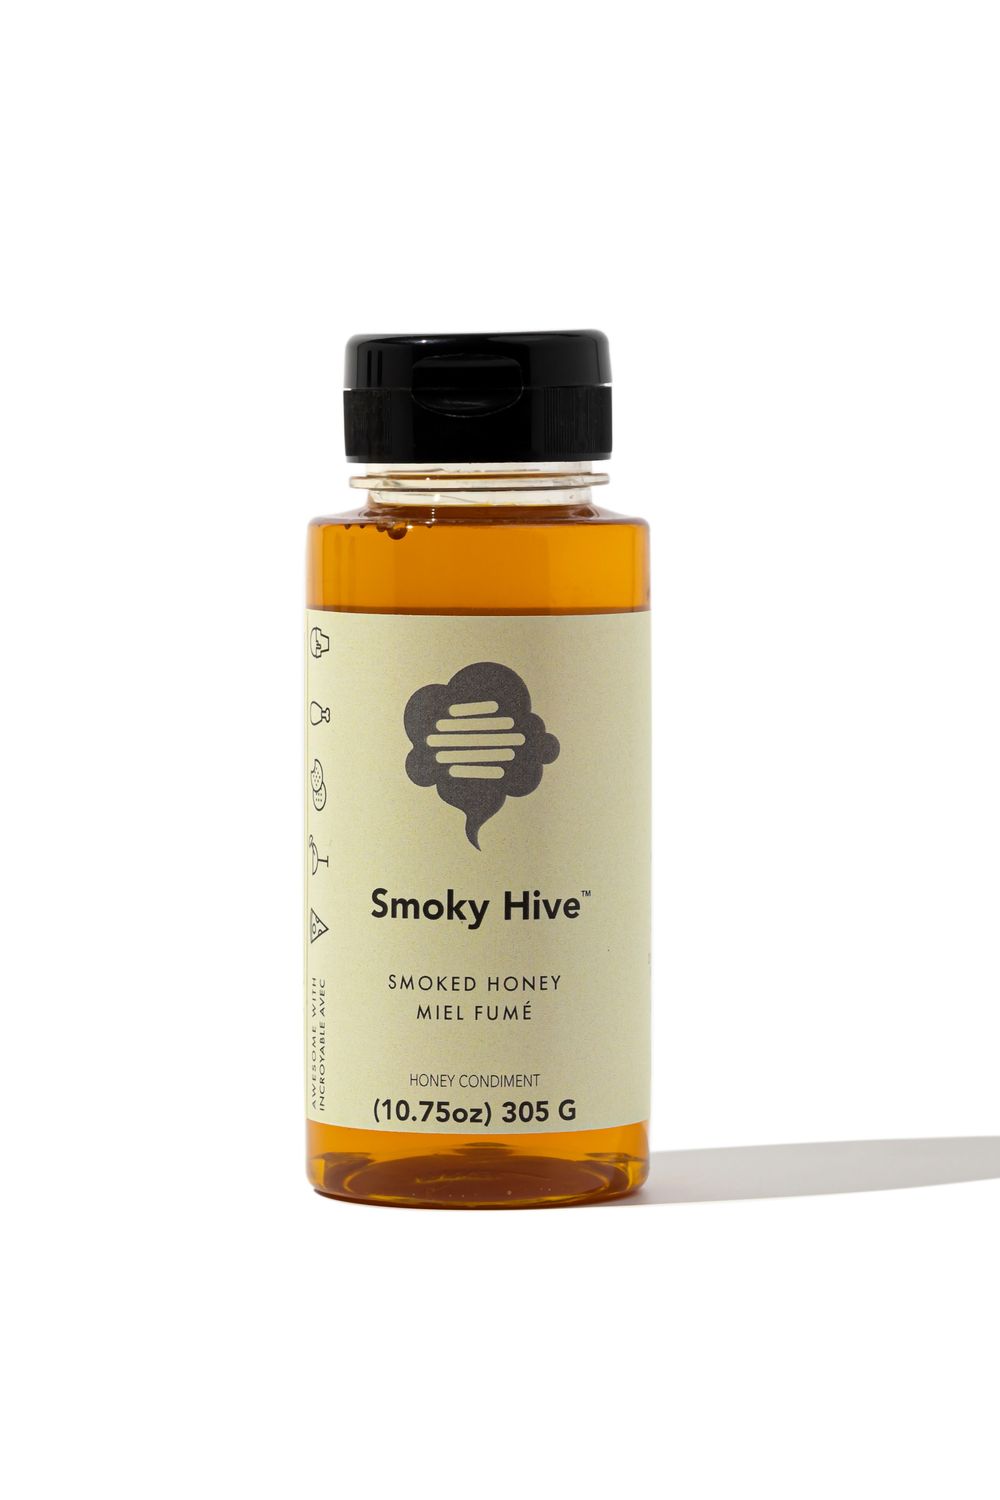 Smoky Hive